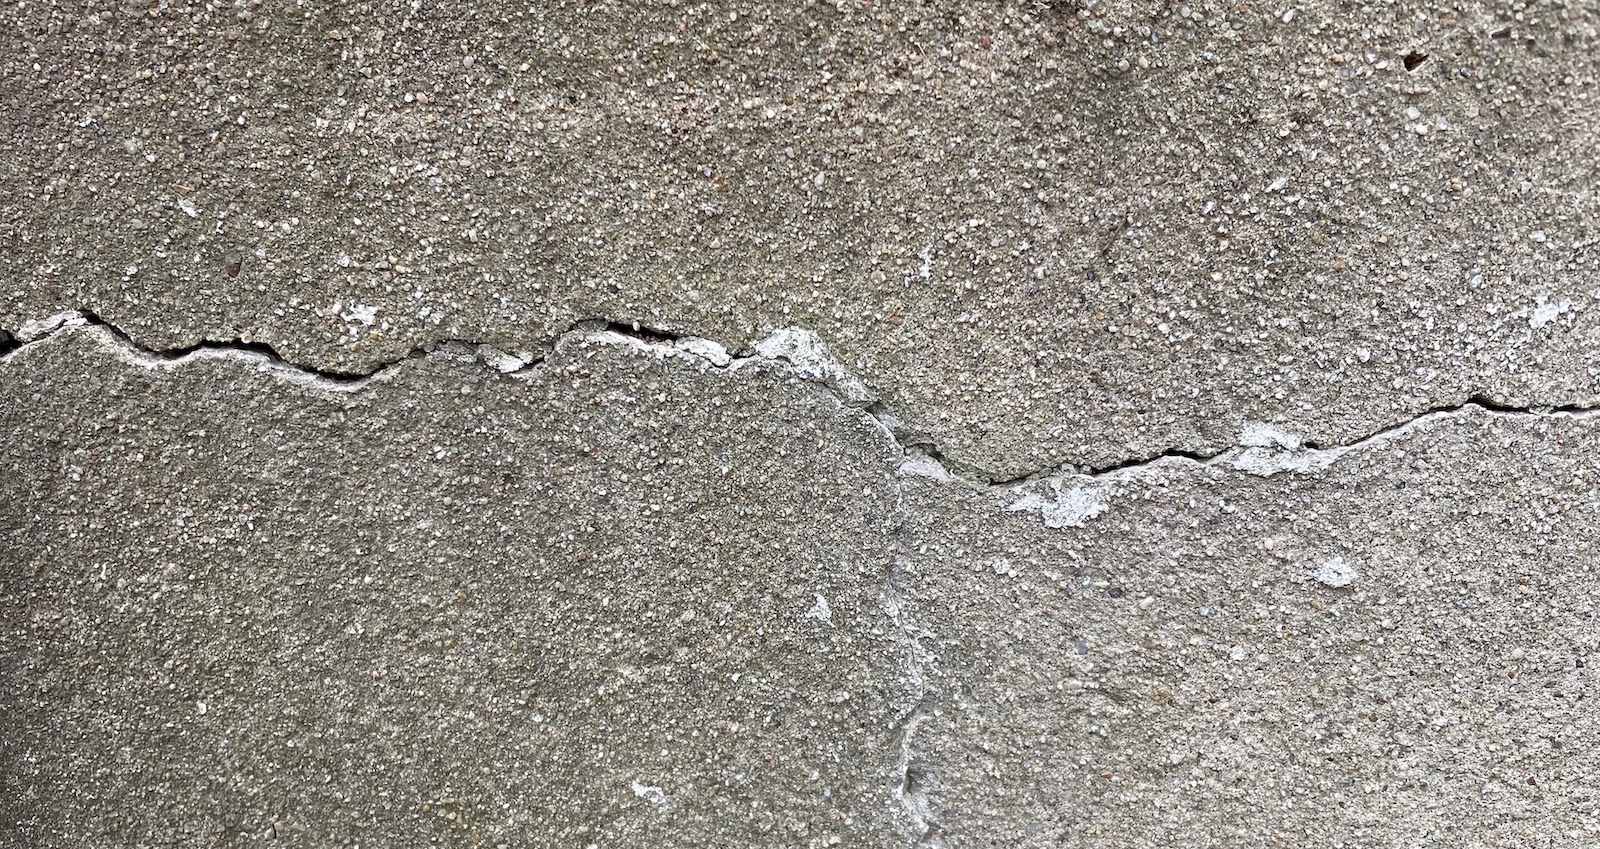 Cracks in stucco